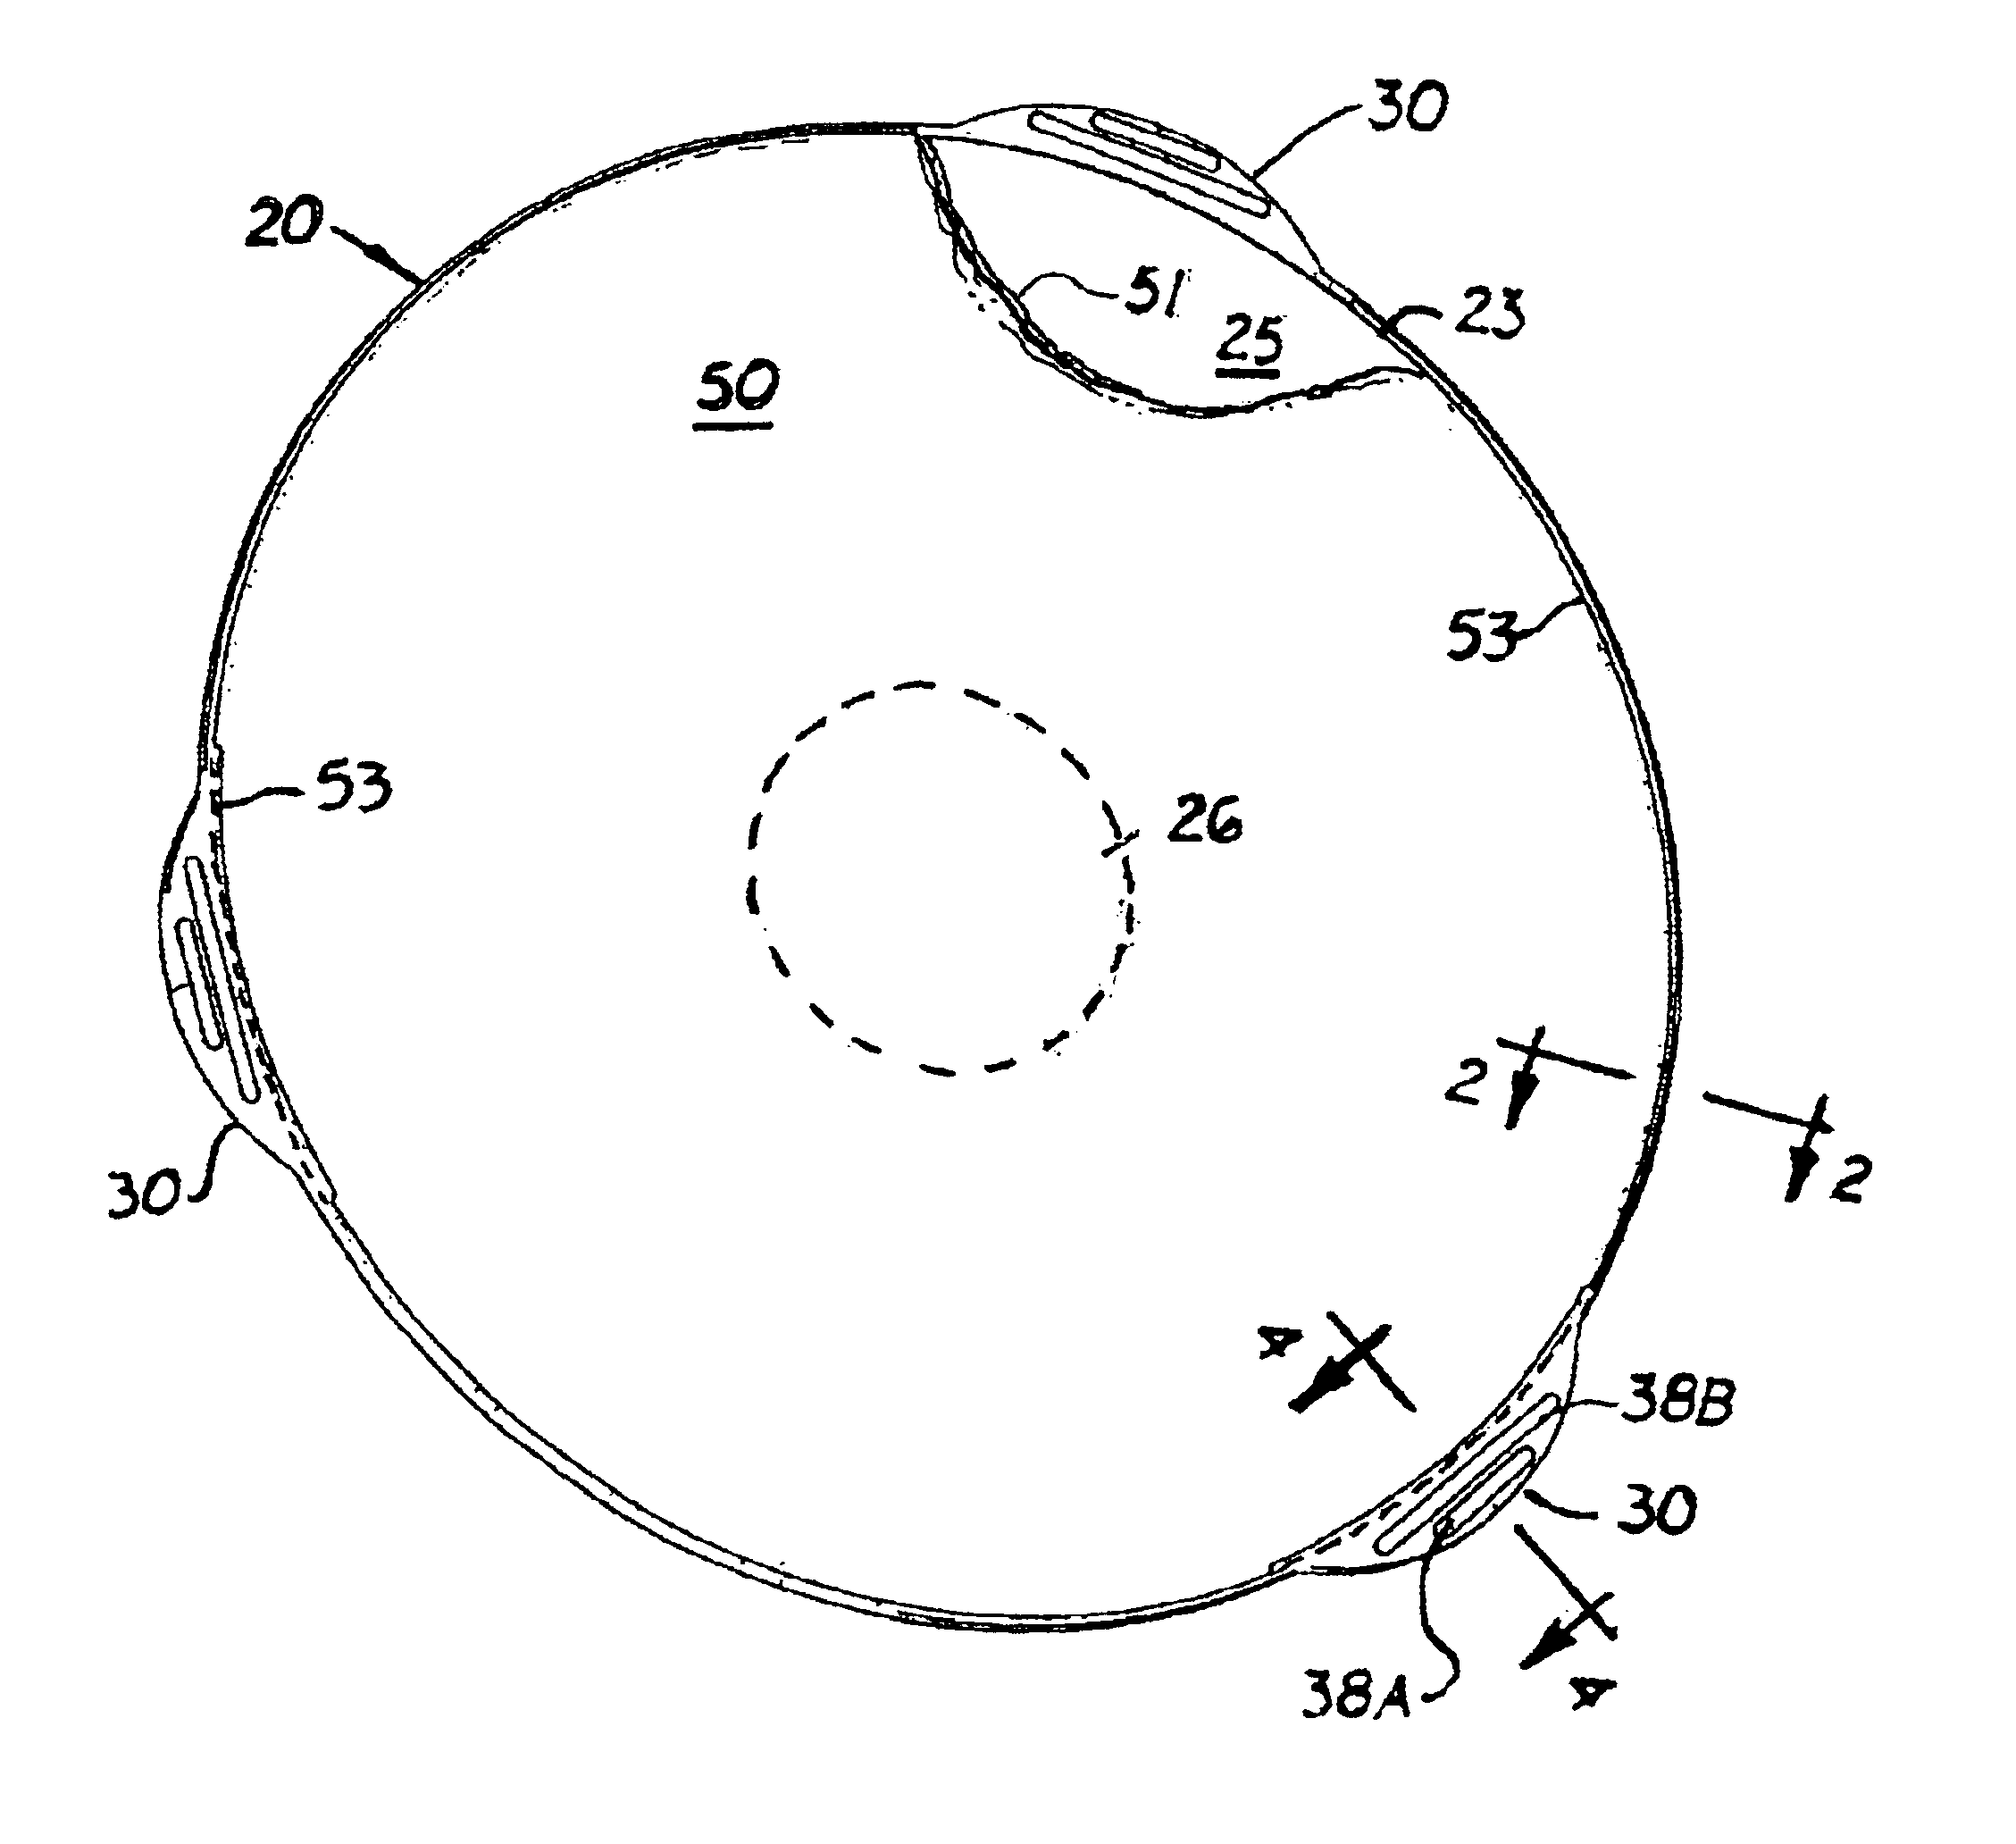 Optical disc holder